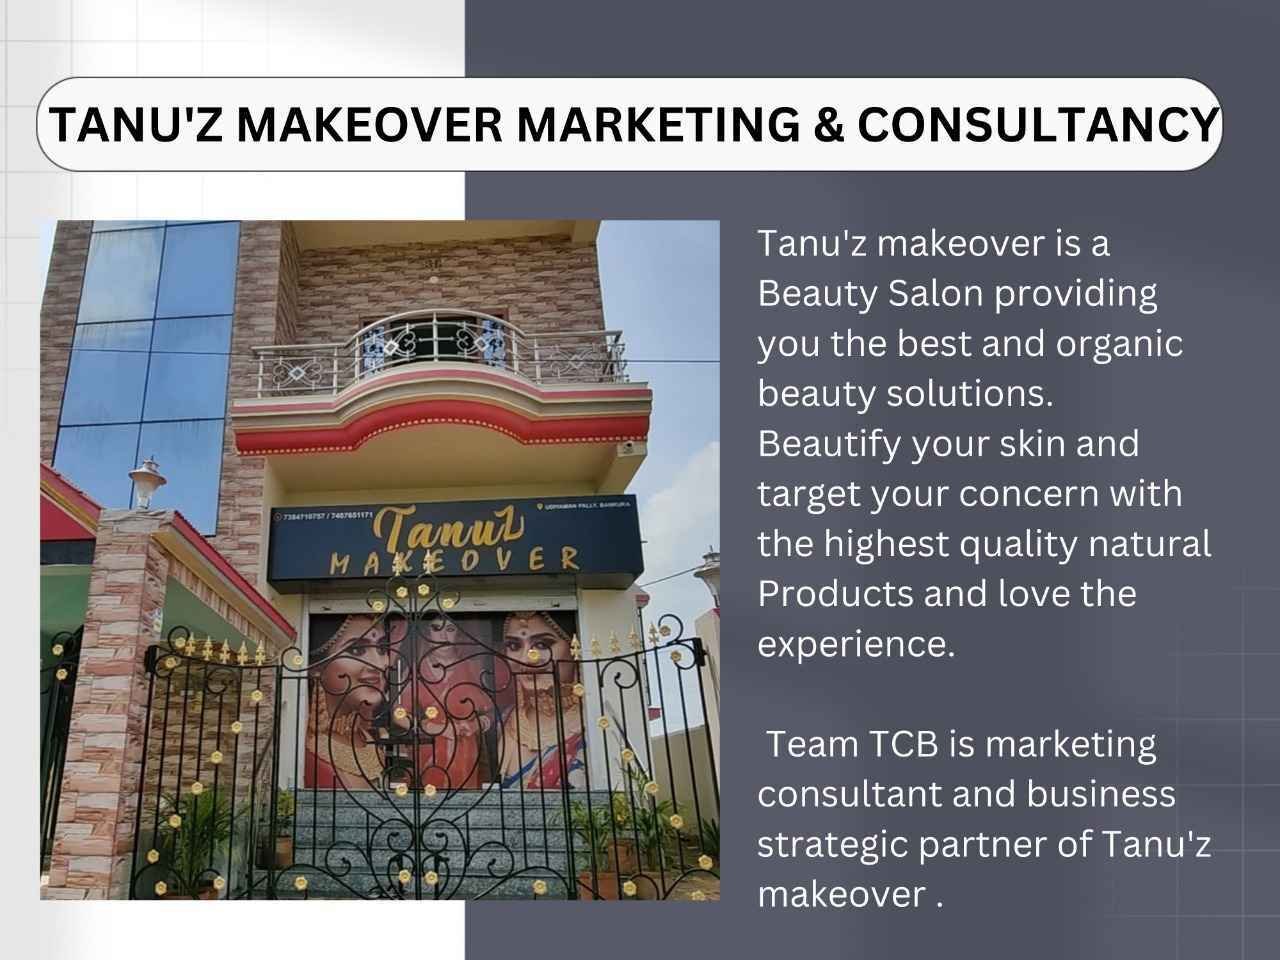 Tanu’z Makeover Marketing & Consultancy – Team TCB